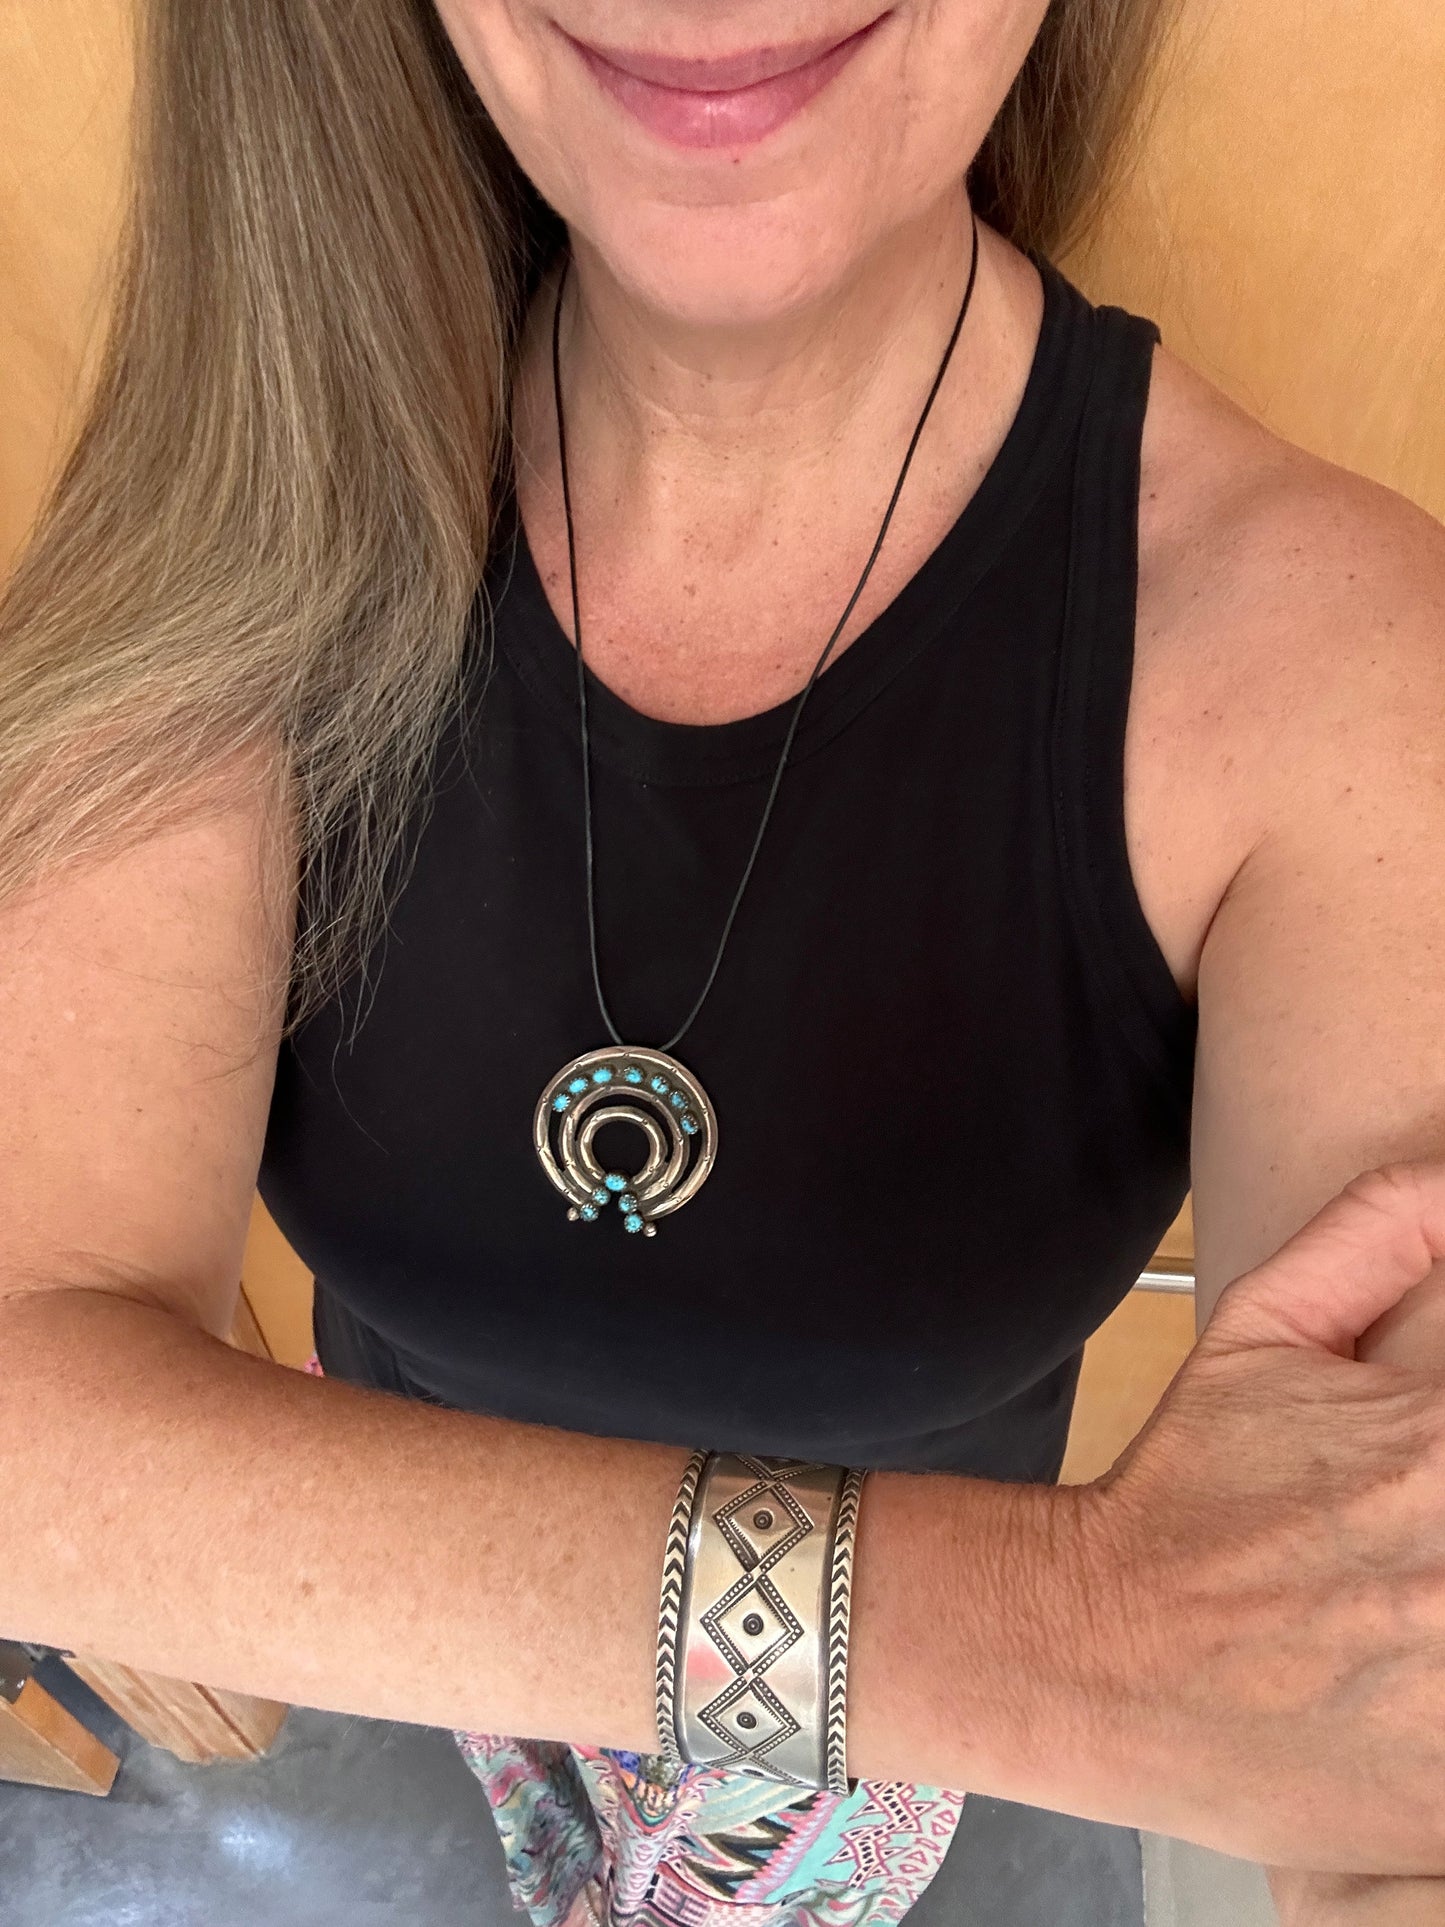 Vintage Navajo silver Bracelet With Striking Geometric Stamp Work - Turquoise & Tufa